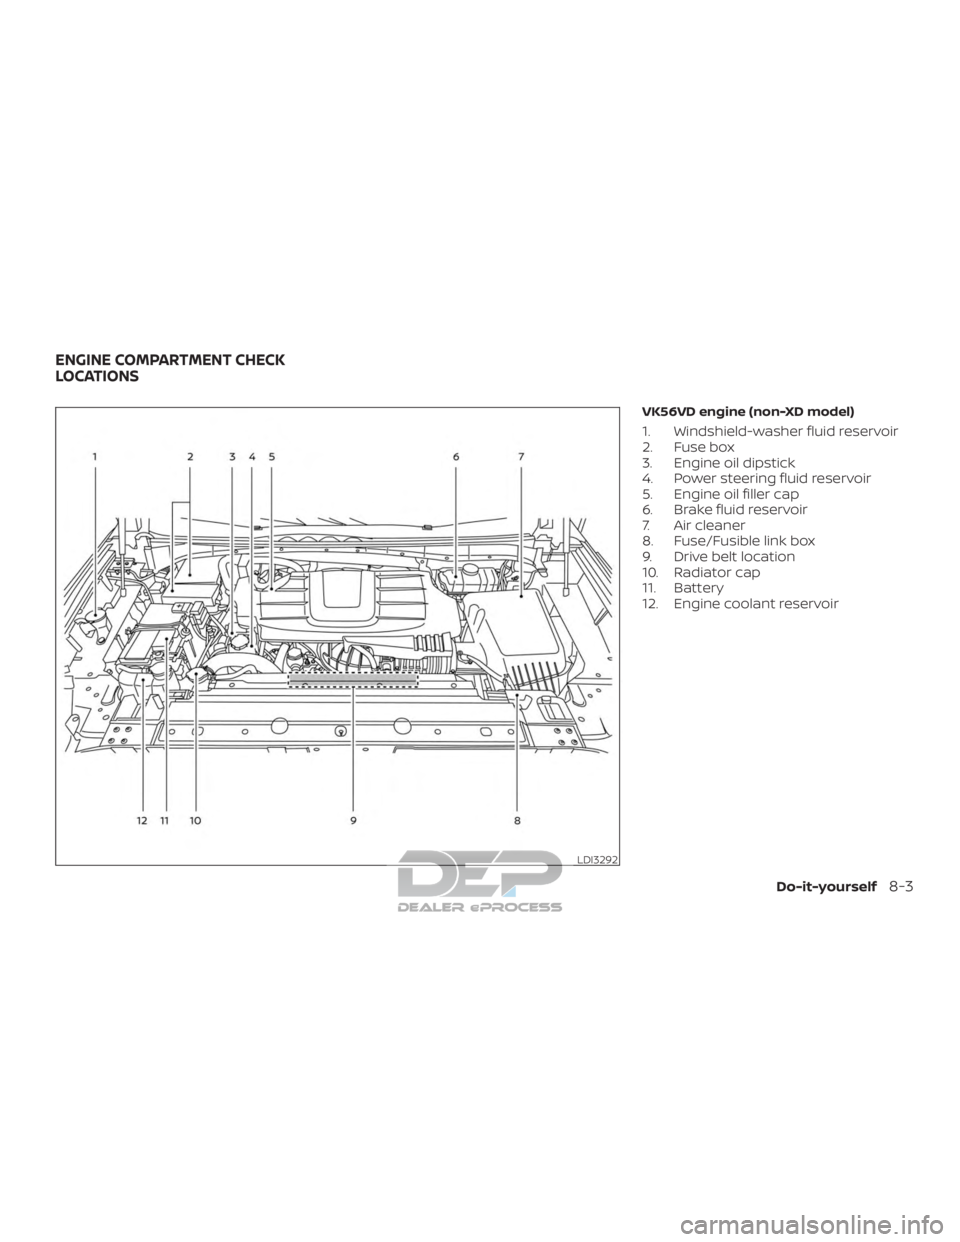 NISSAN TITAN 2019  Owner´s Manual VK56VD engine (non-XD model)
1. Windshield-washer fluid reservoir
2. Fuse box
3. Engine oil dipstick
4. Power steering fluid reservoir
5. Engine oil filler cap
6. Brake fluid reservoir
7. Air cleaner
